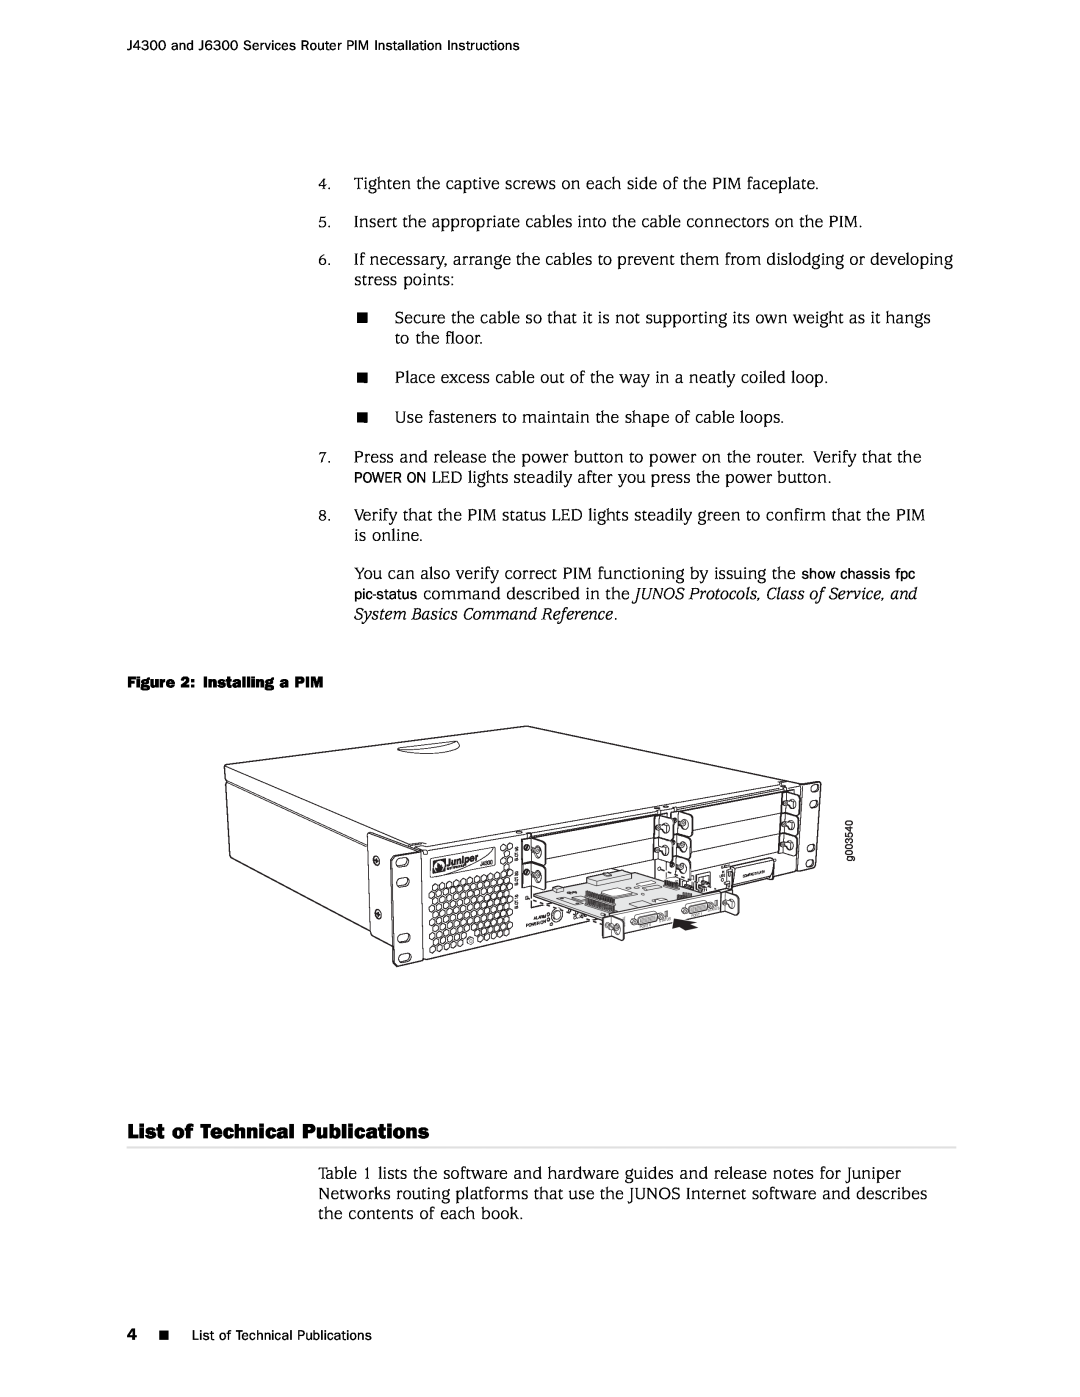 Juniper Networks J4300, J6300 installation instructions List of Technical Publications, Installing a PIM 